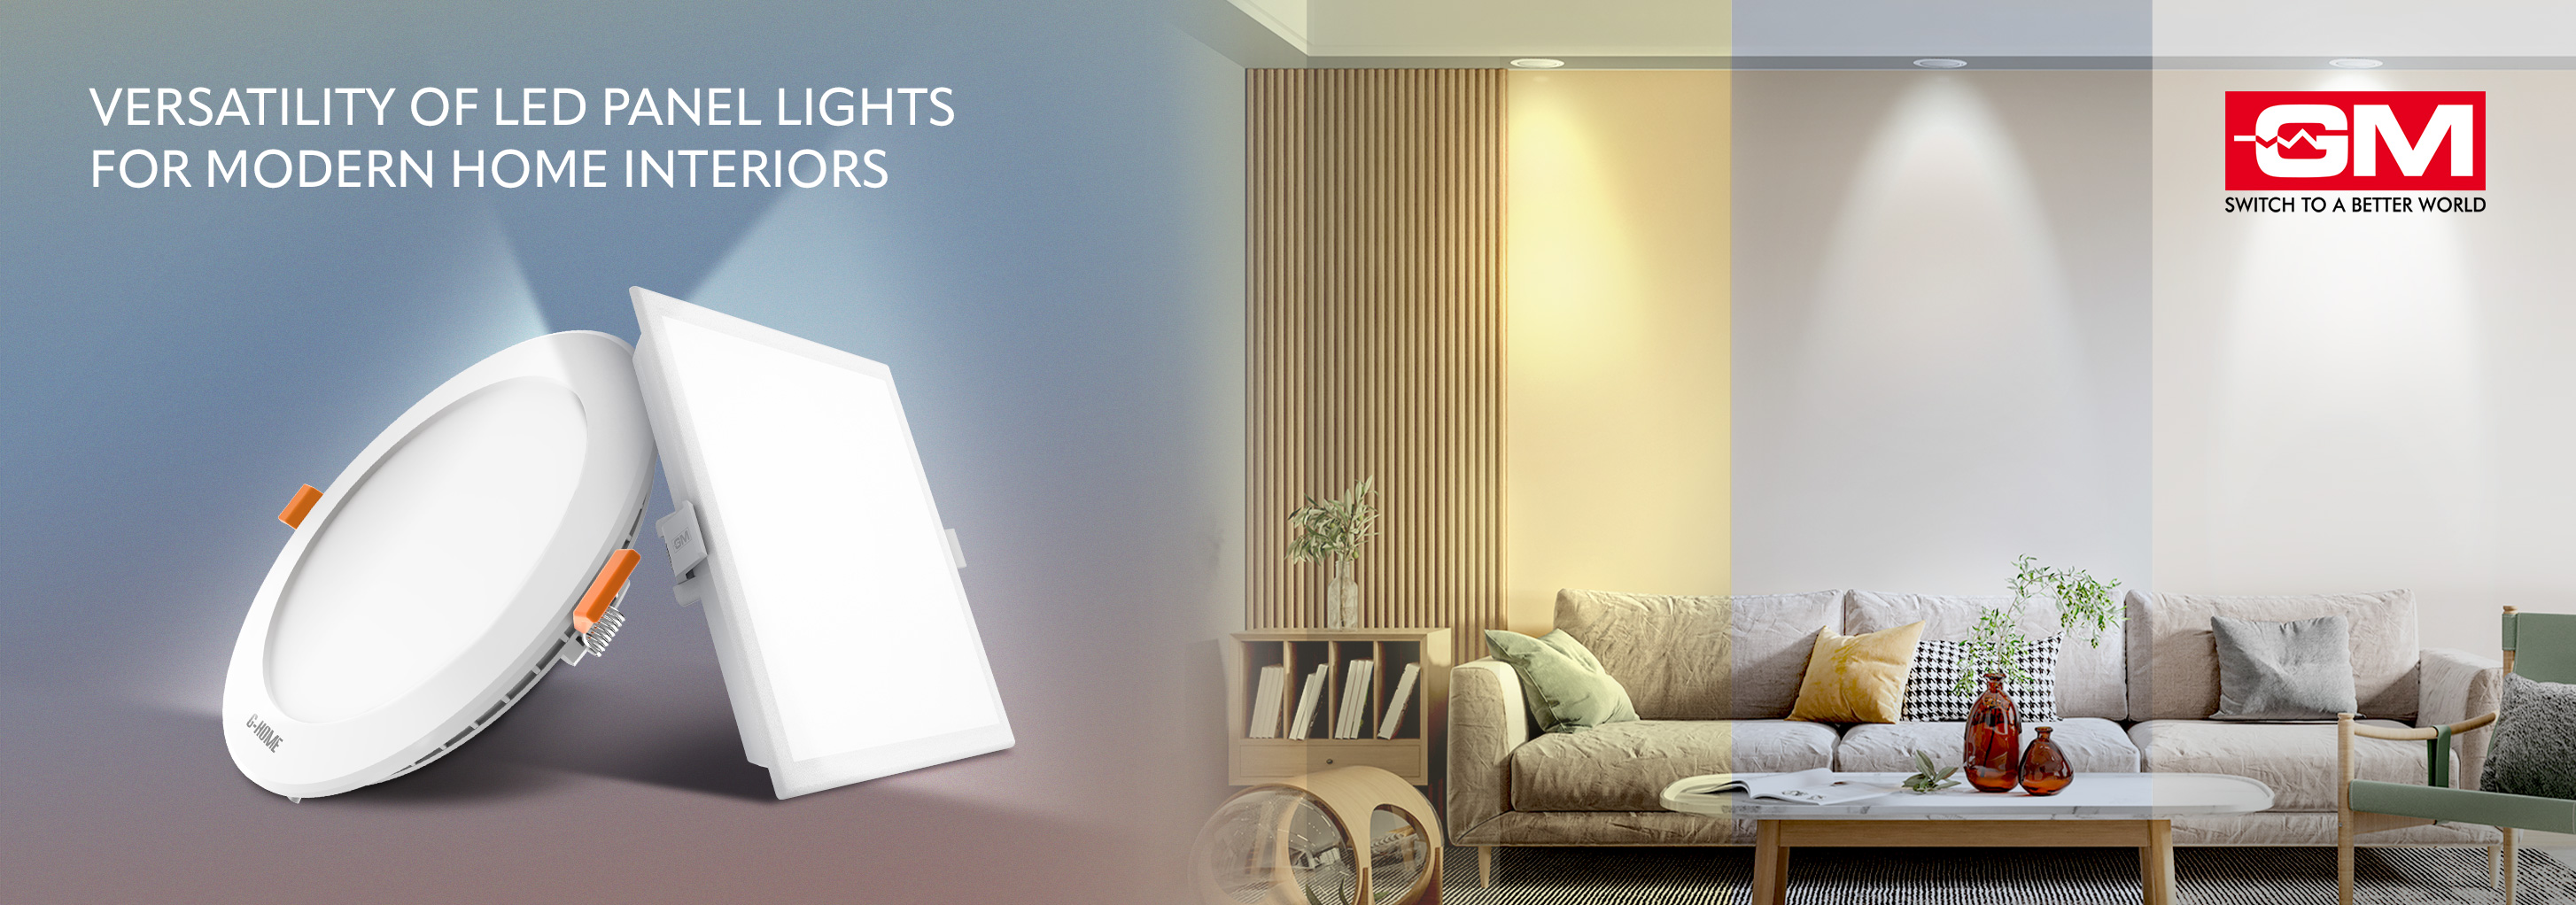 Versatility of LED Panel Lights for Modern Home Interiors